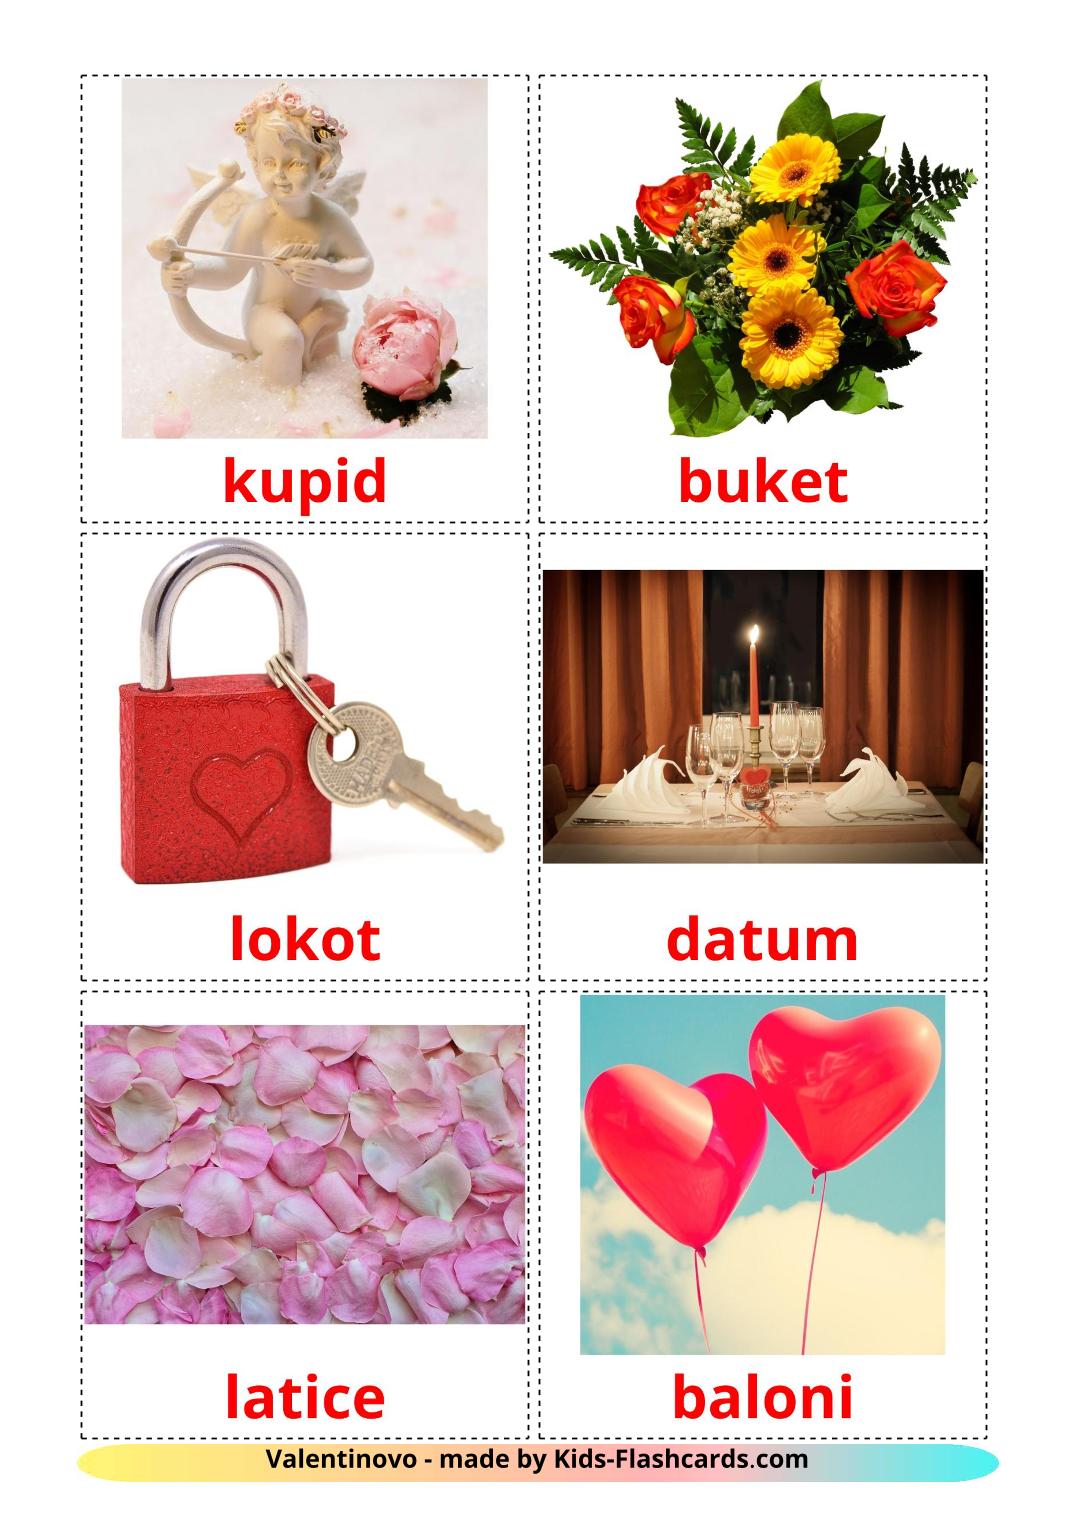 Valentine's Day - 18 Free Printable croatian Flashcards 